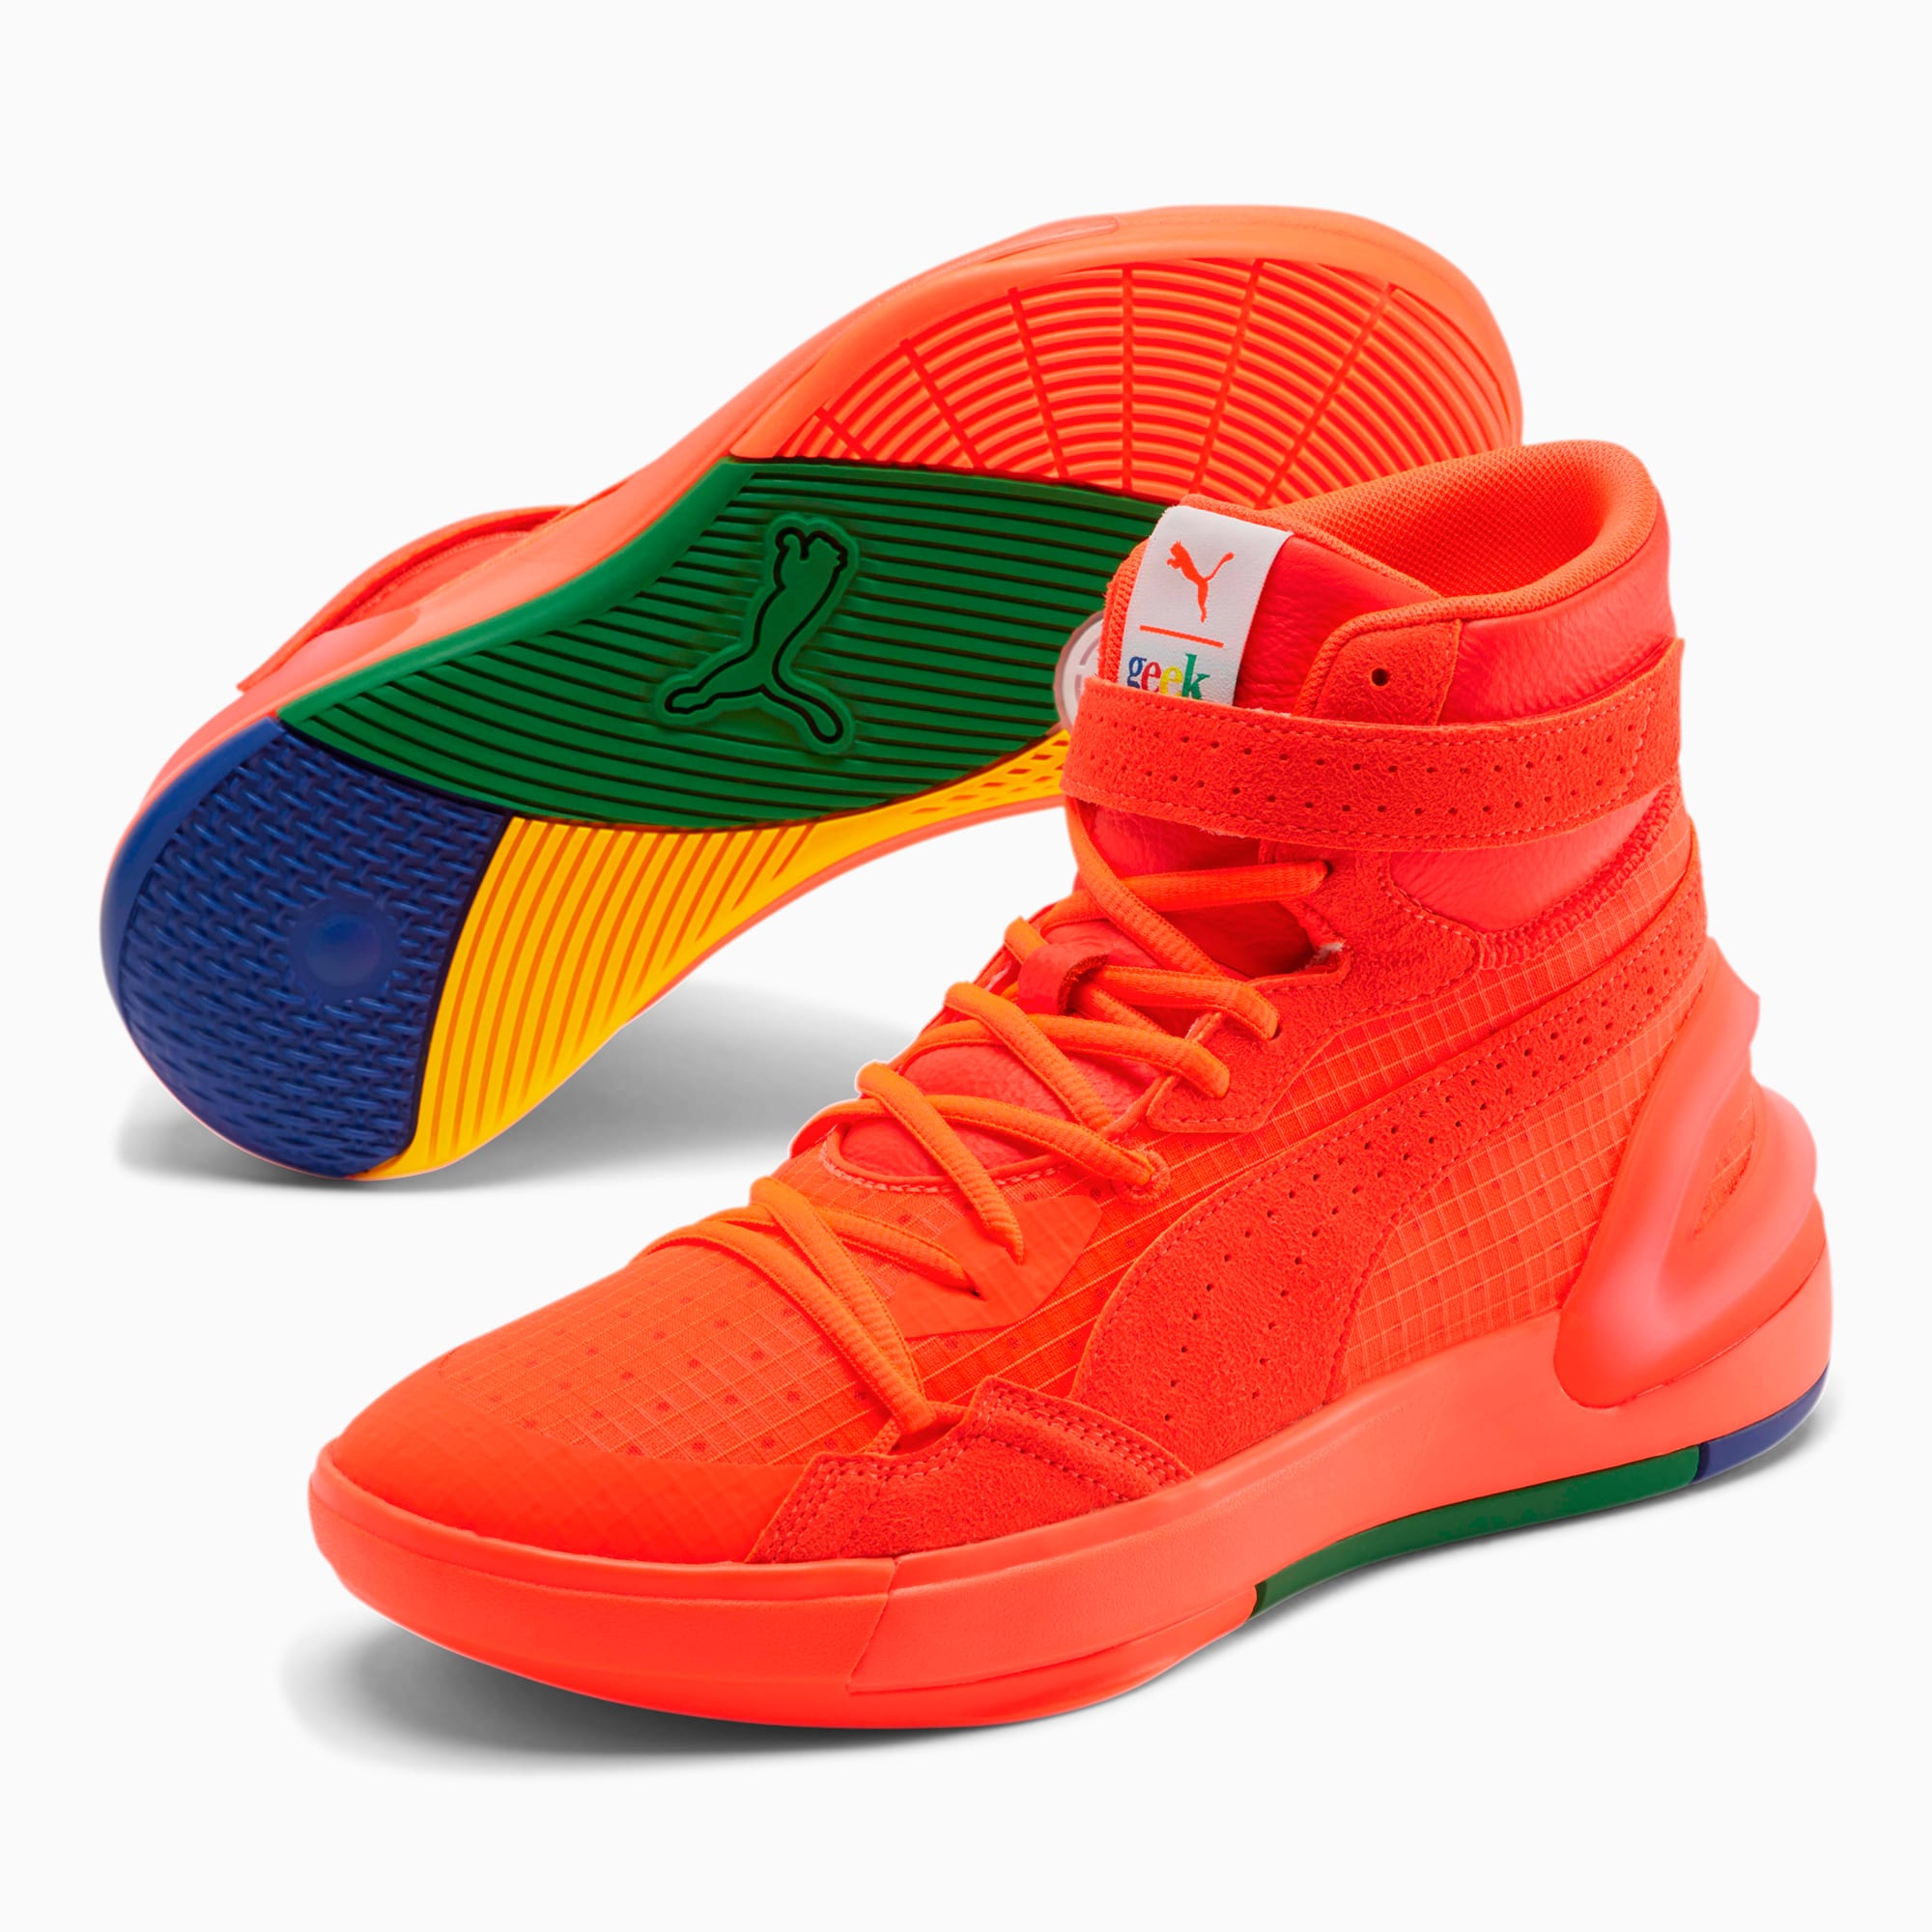 puma basketball shoes orange